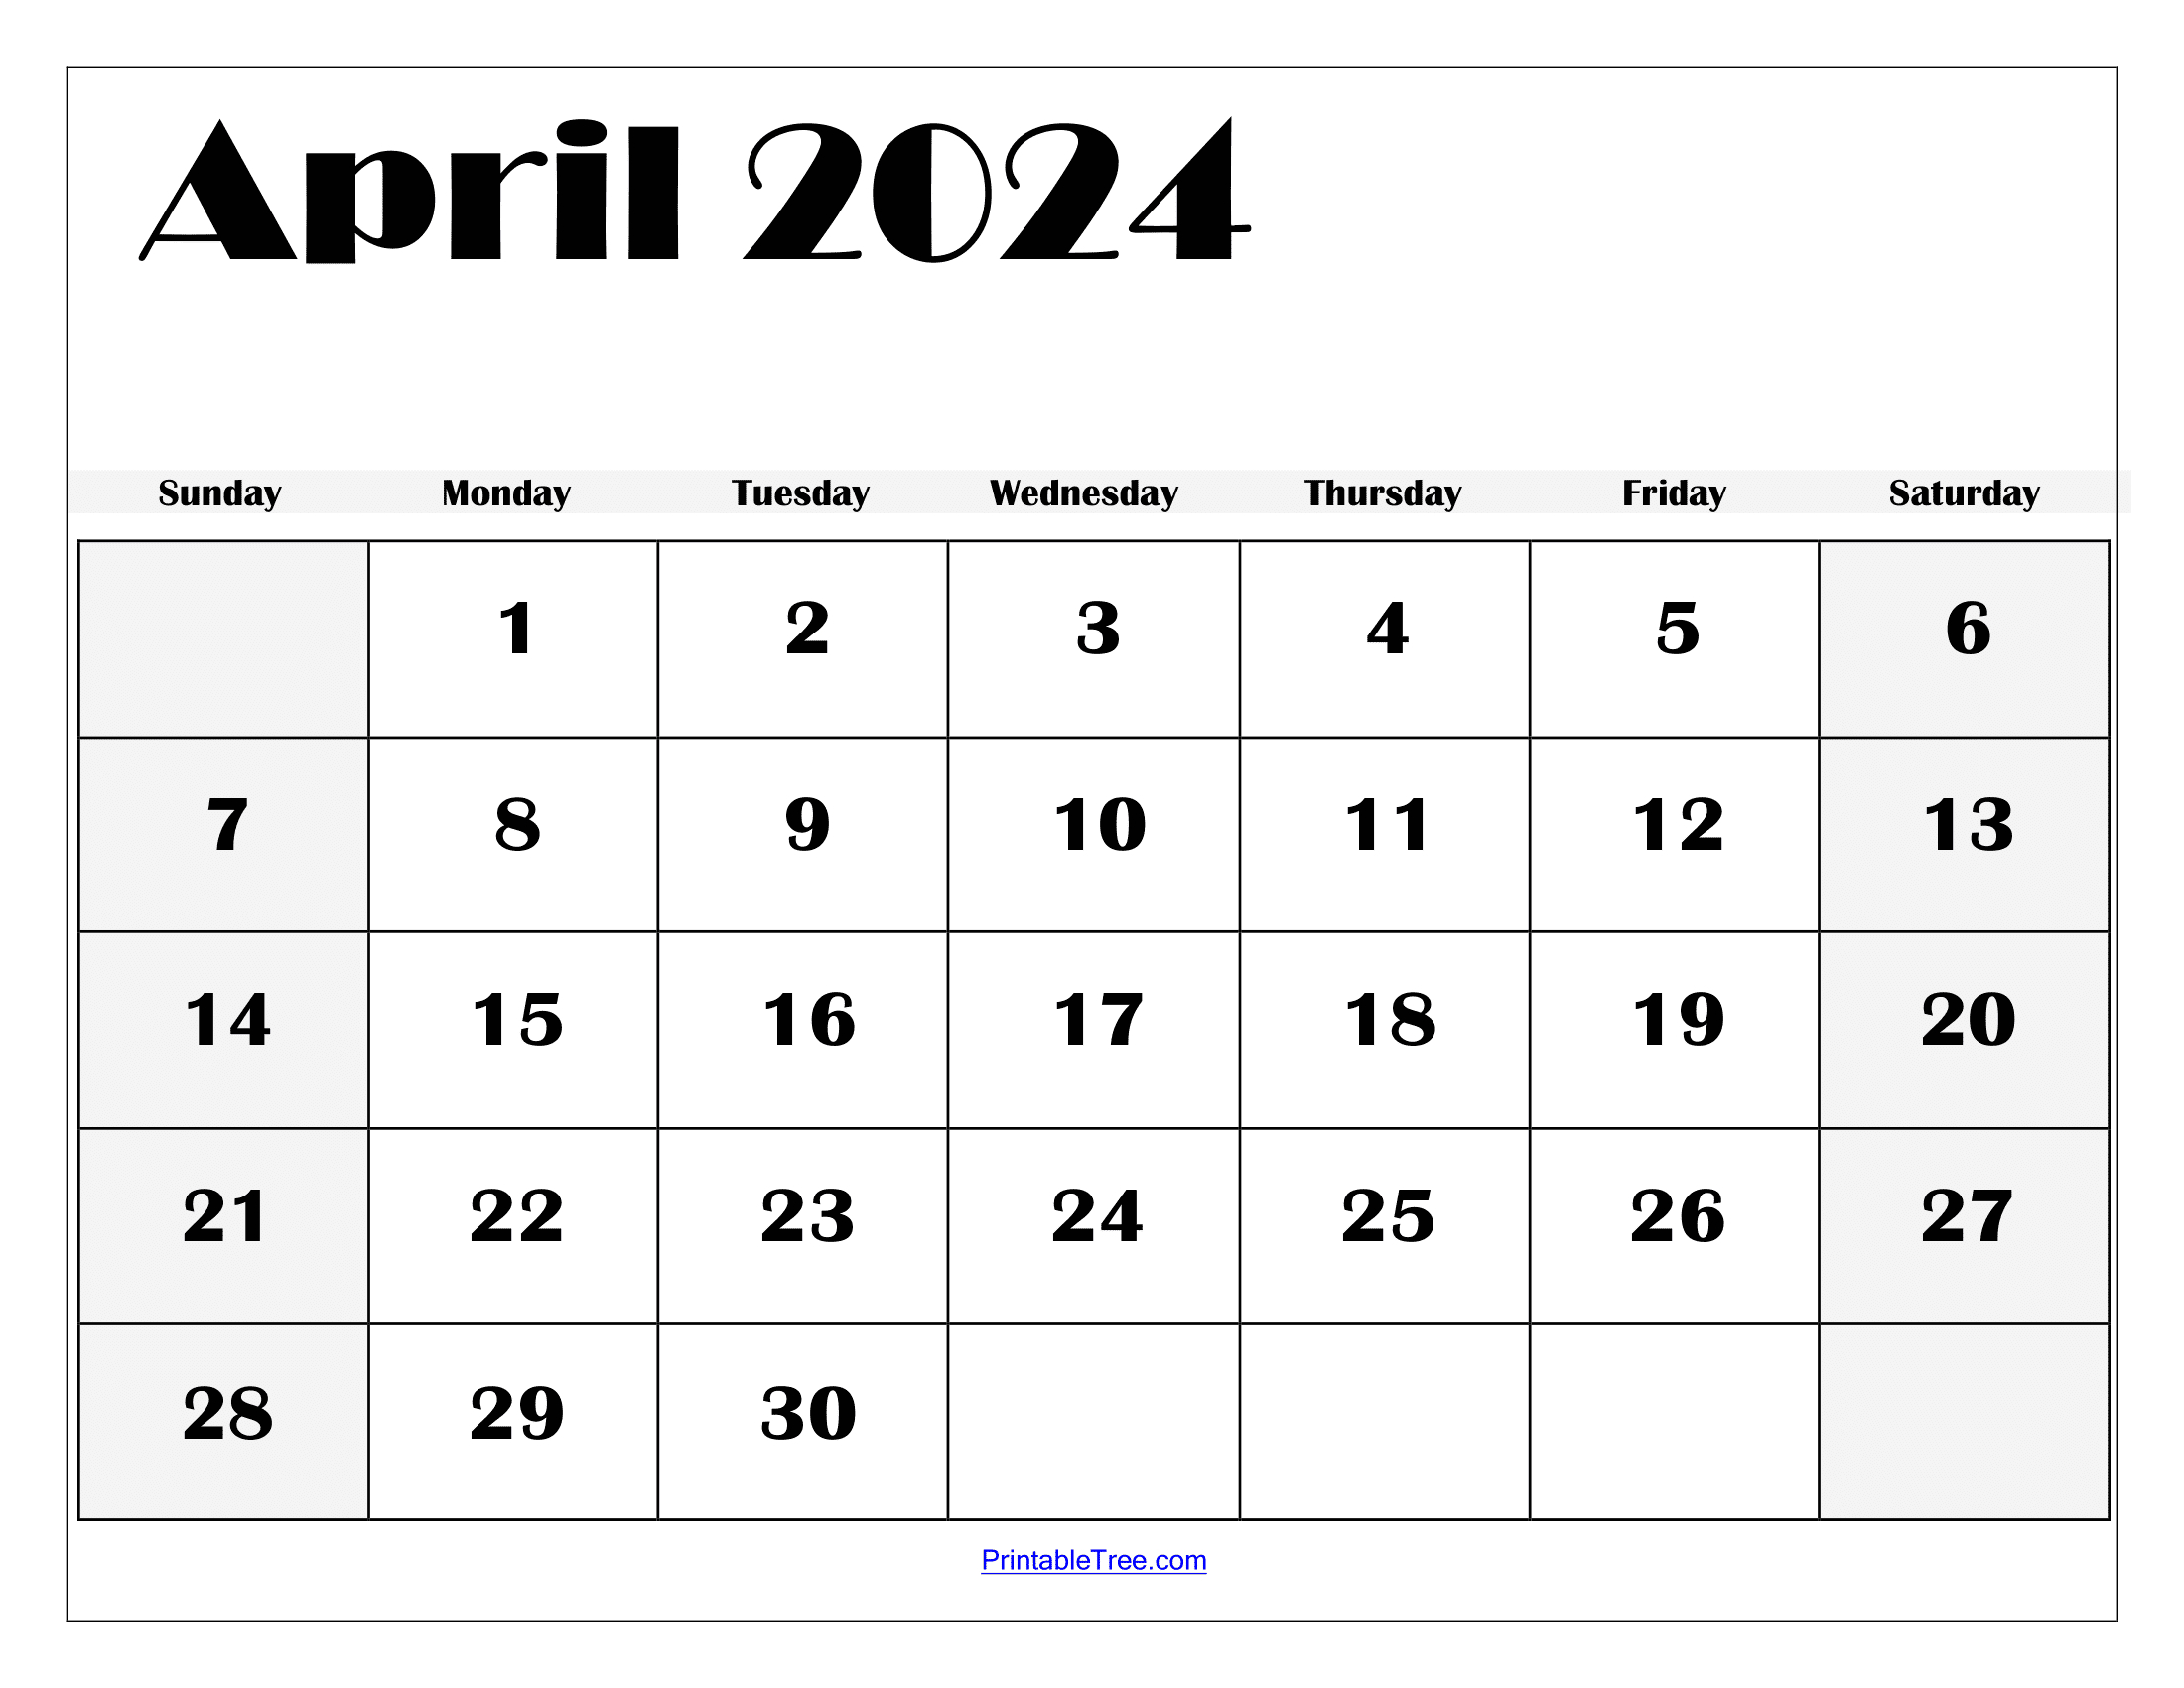 Blank April 2024 Calendar Printable Pdf Template With Holidays | Printable Calendar 2024 April